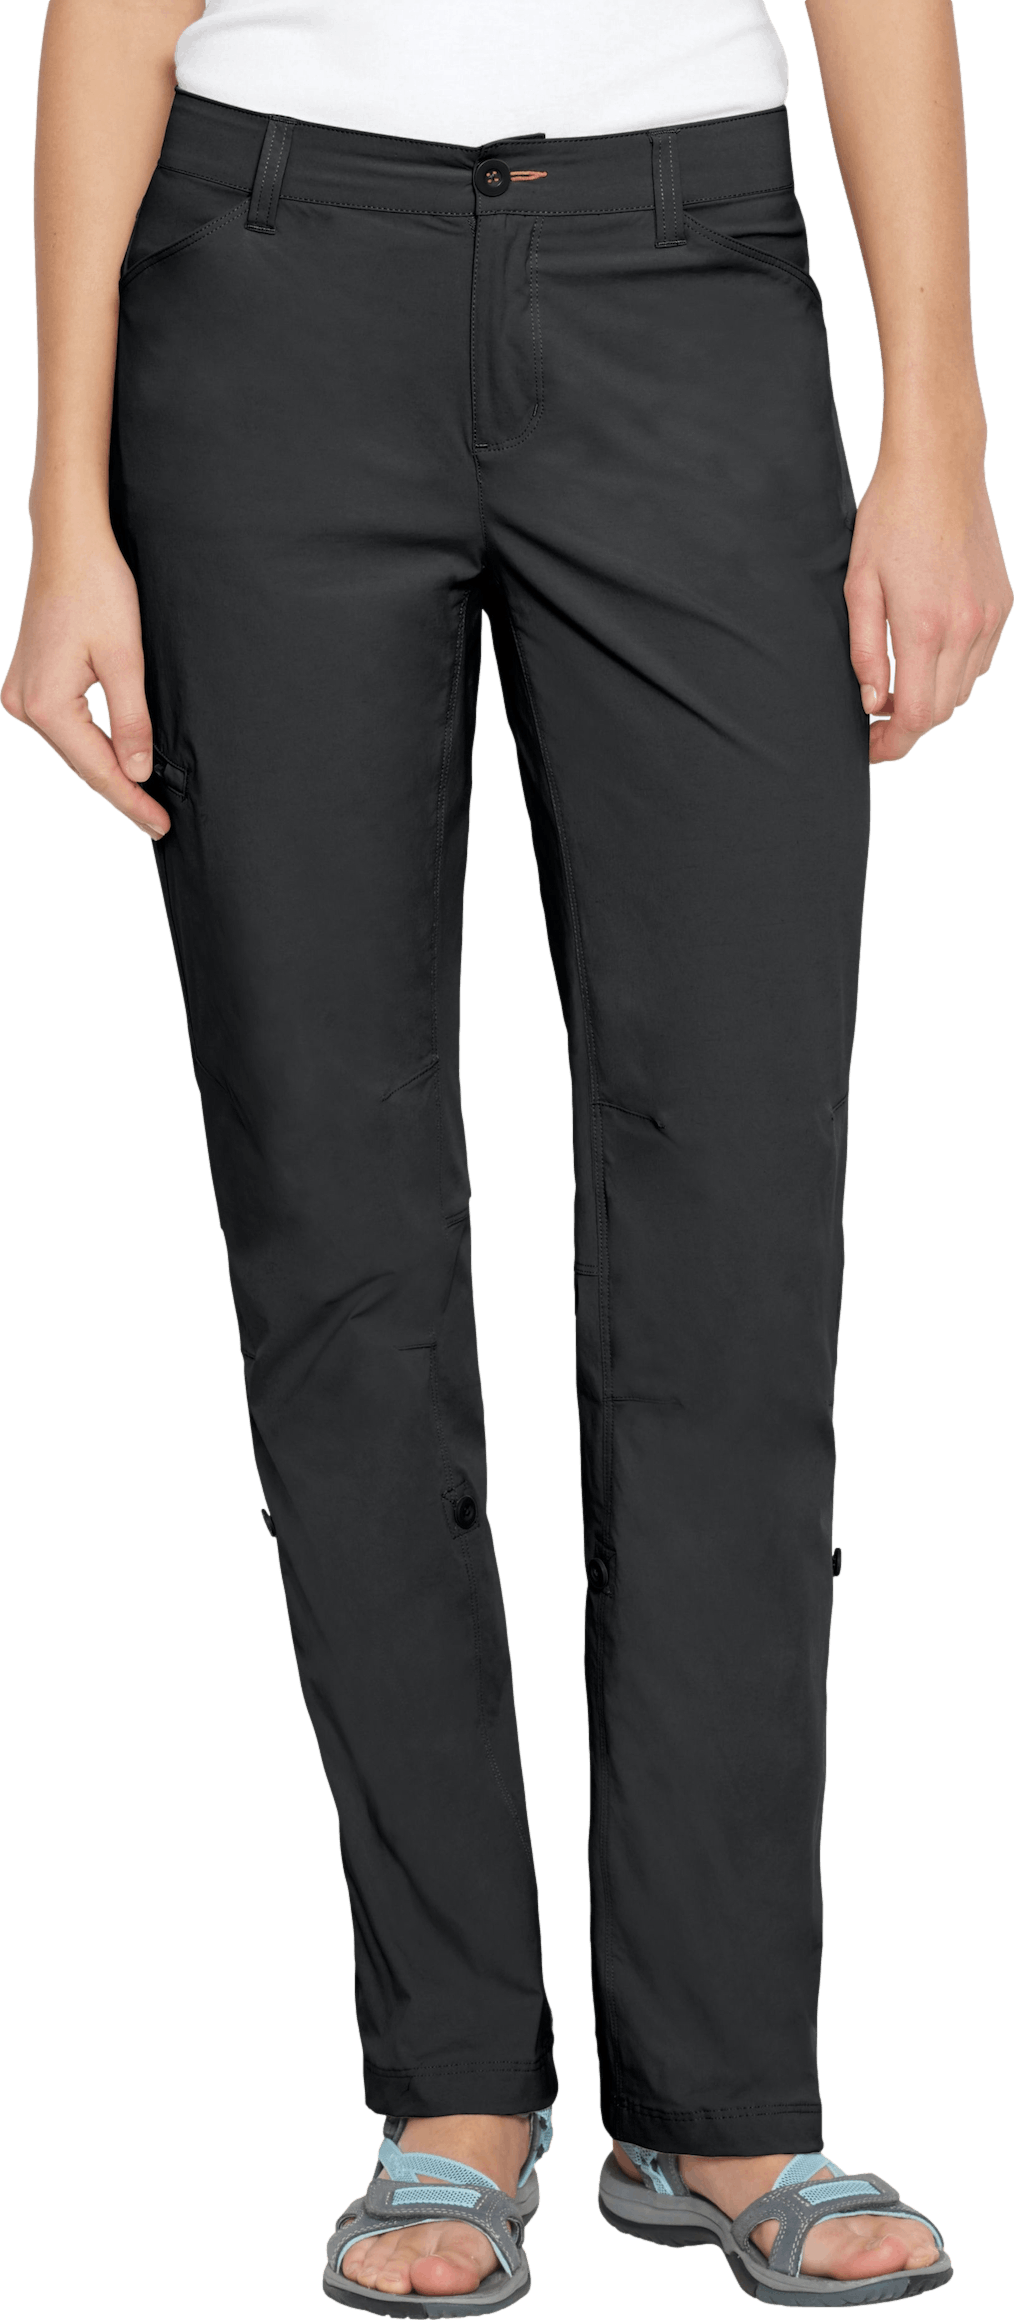 Jackson Quick-Dry Performance Pants